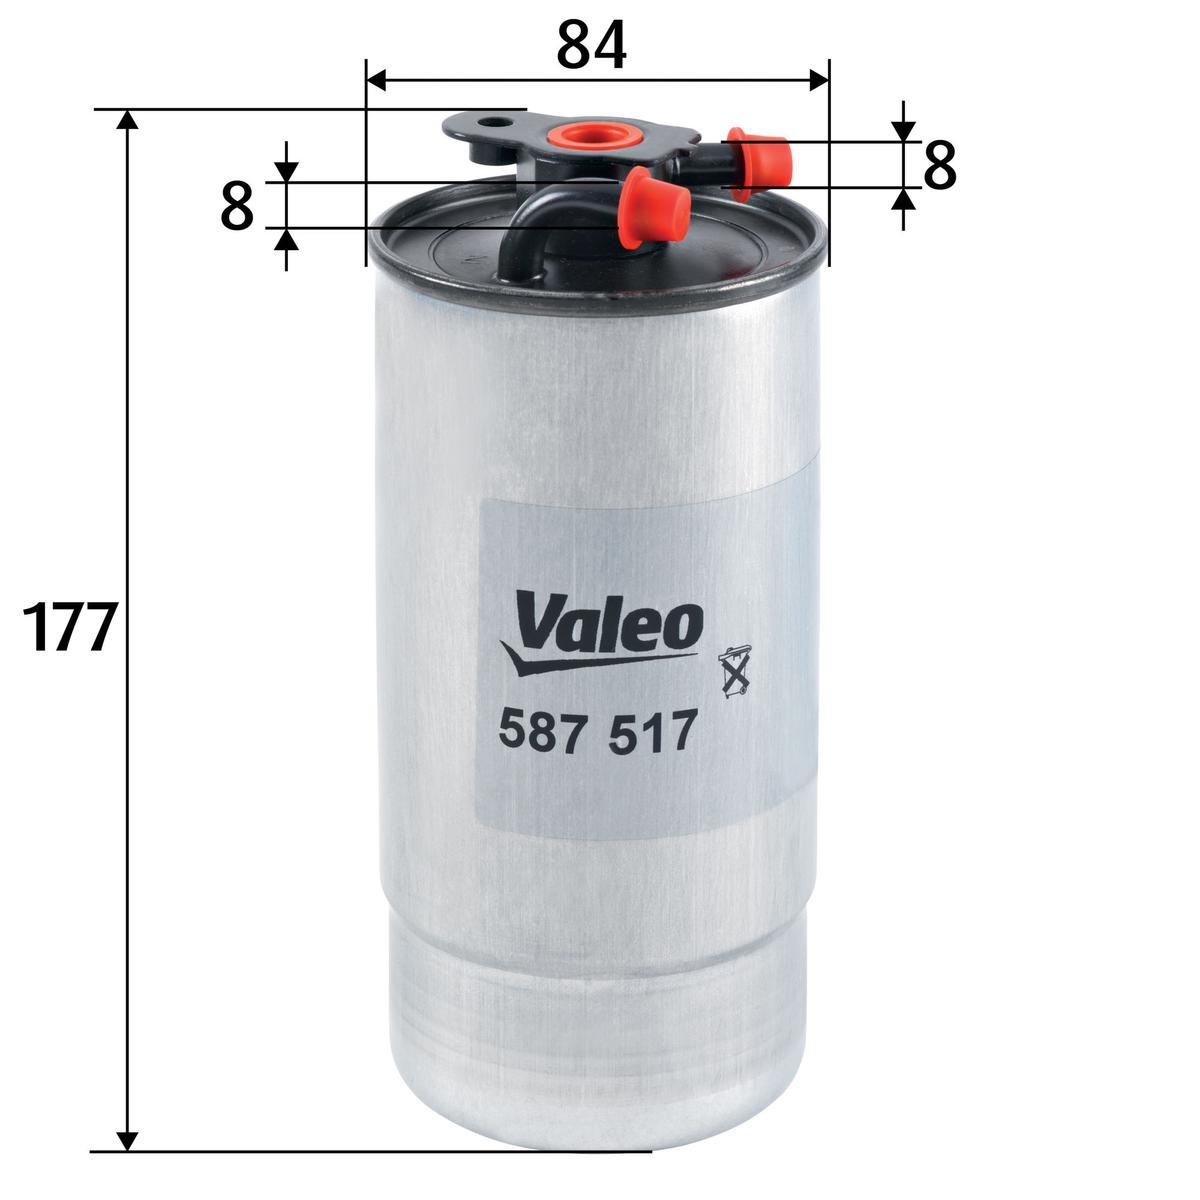 VALEO 587517 Fuel filters In-Line Filter, 8mm, 8mm